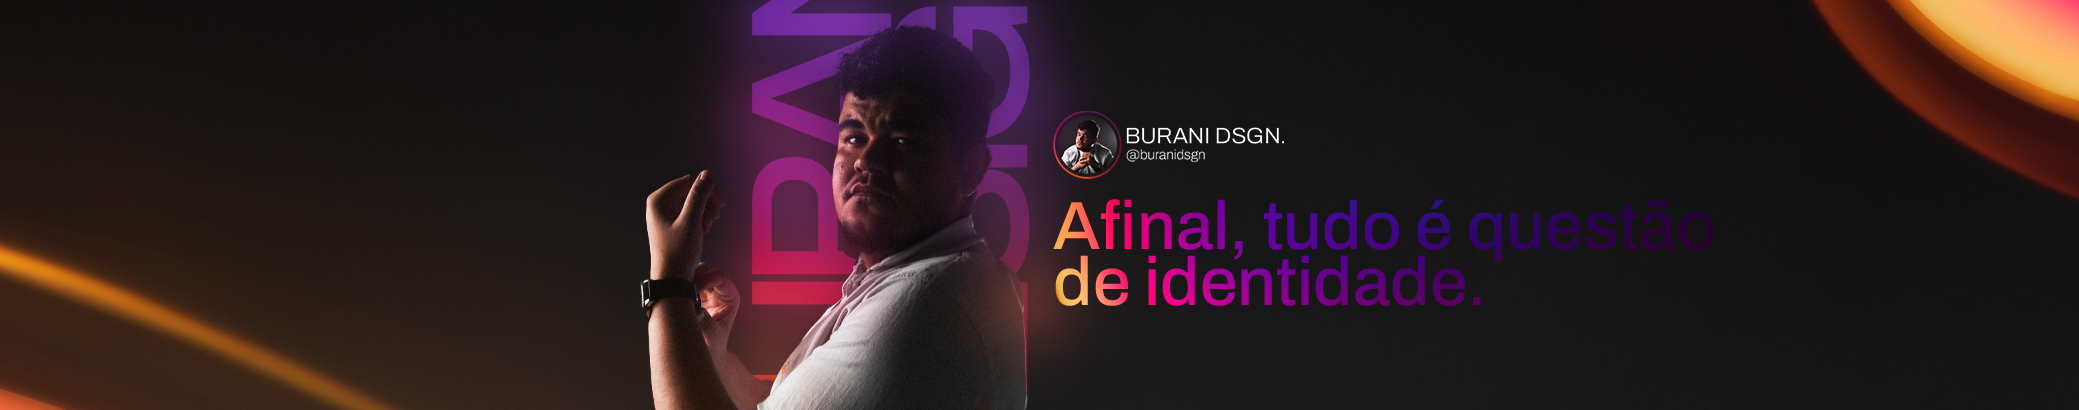 Vitor Burani's profile banner